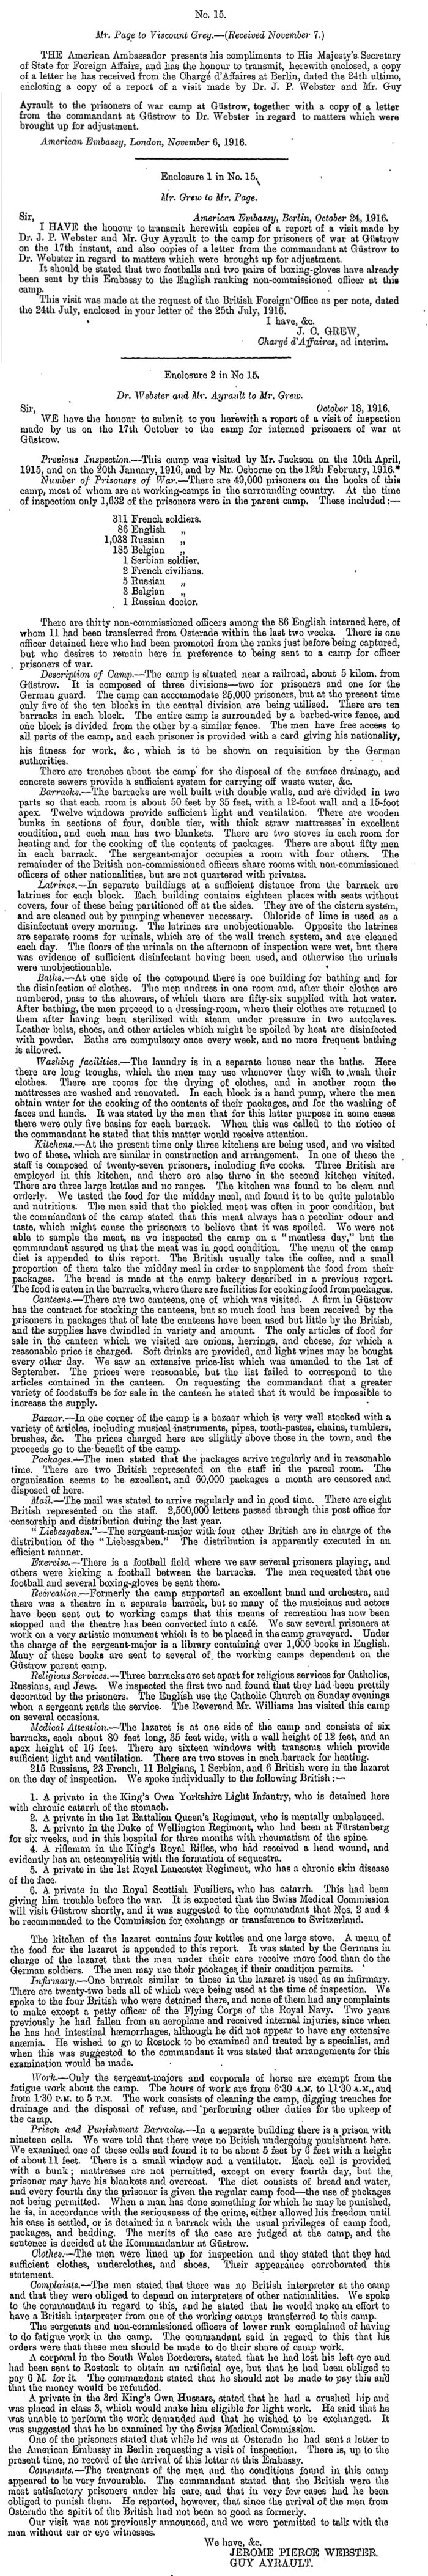 TXT 1917 Parliament papers 17 01